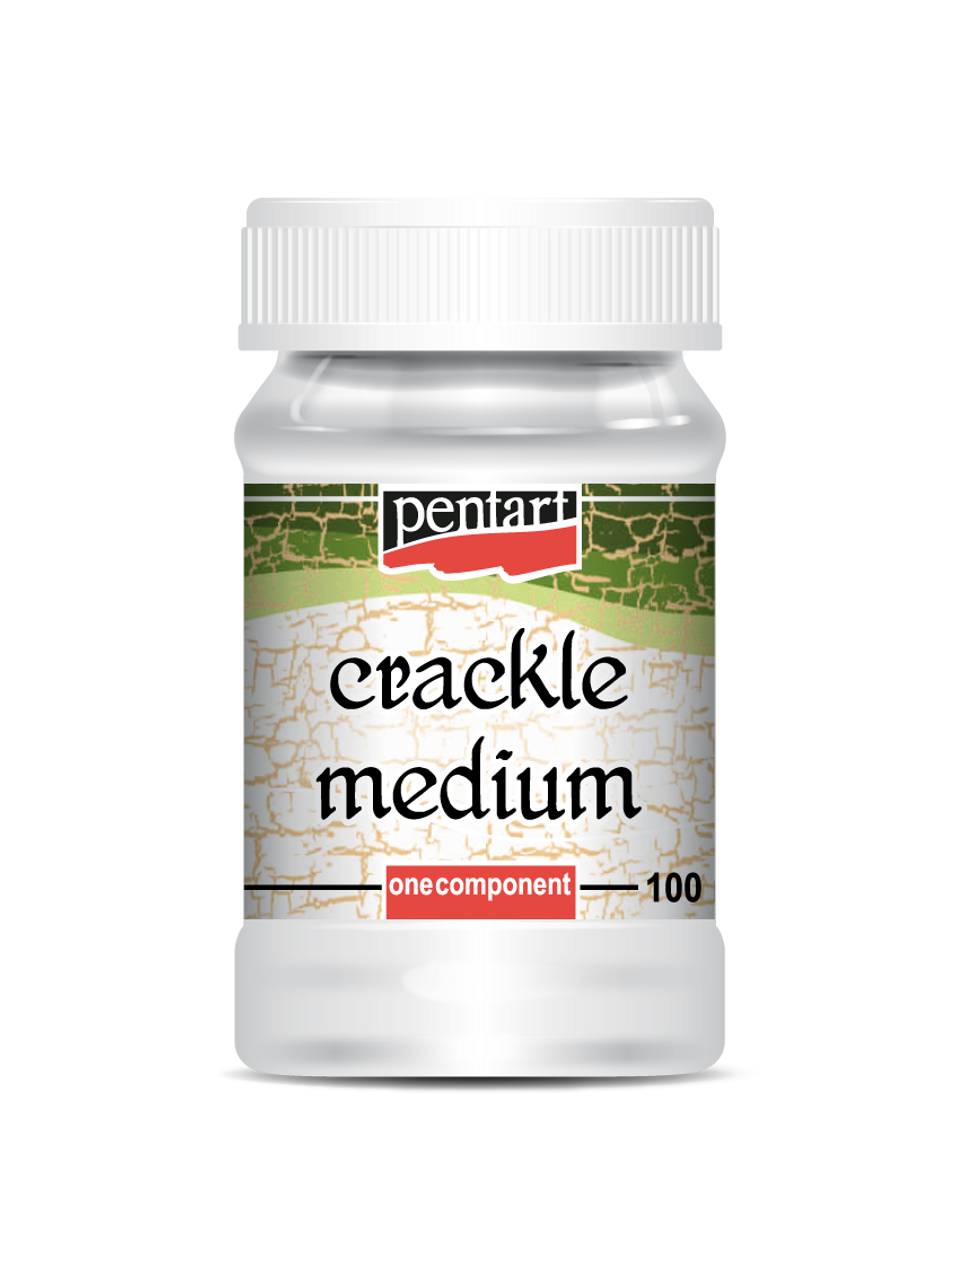 Pentart Crackle Medium - Decoupage Queen